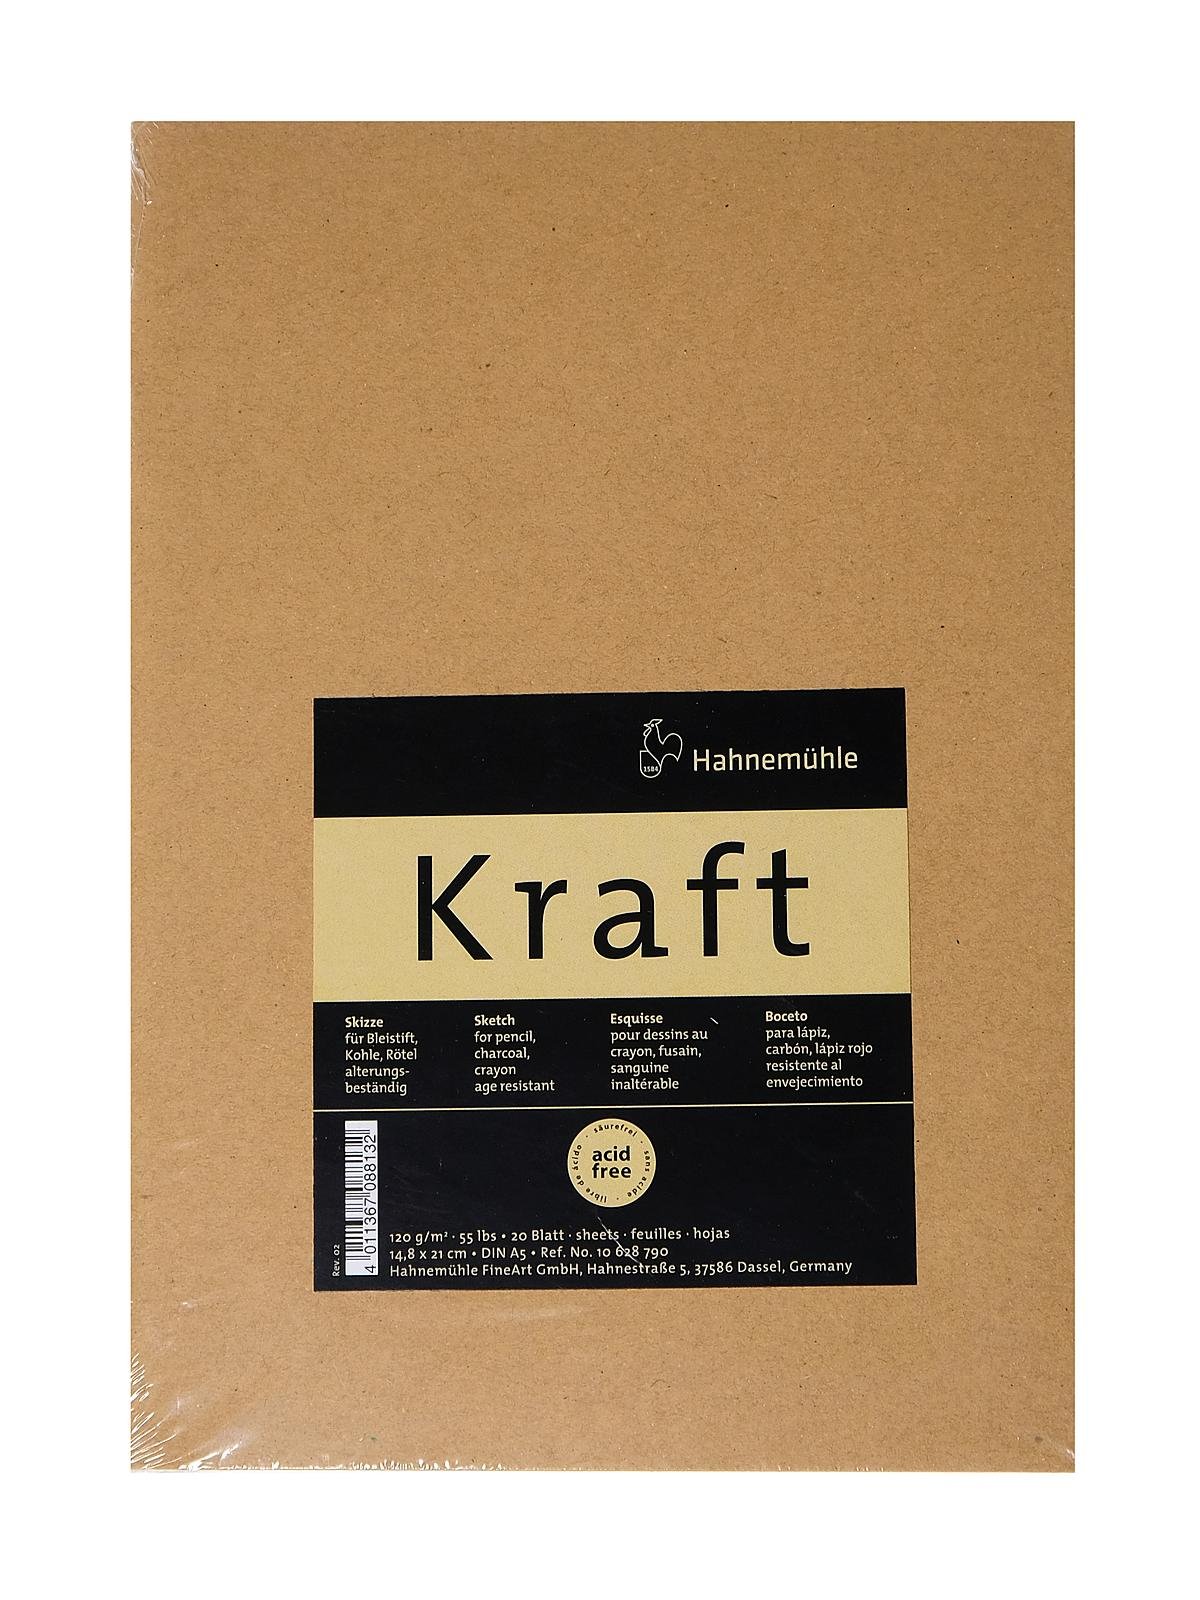 Hahnemuhle Kraft Paper Sketch Booklets